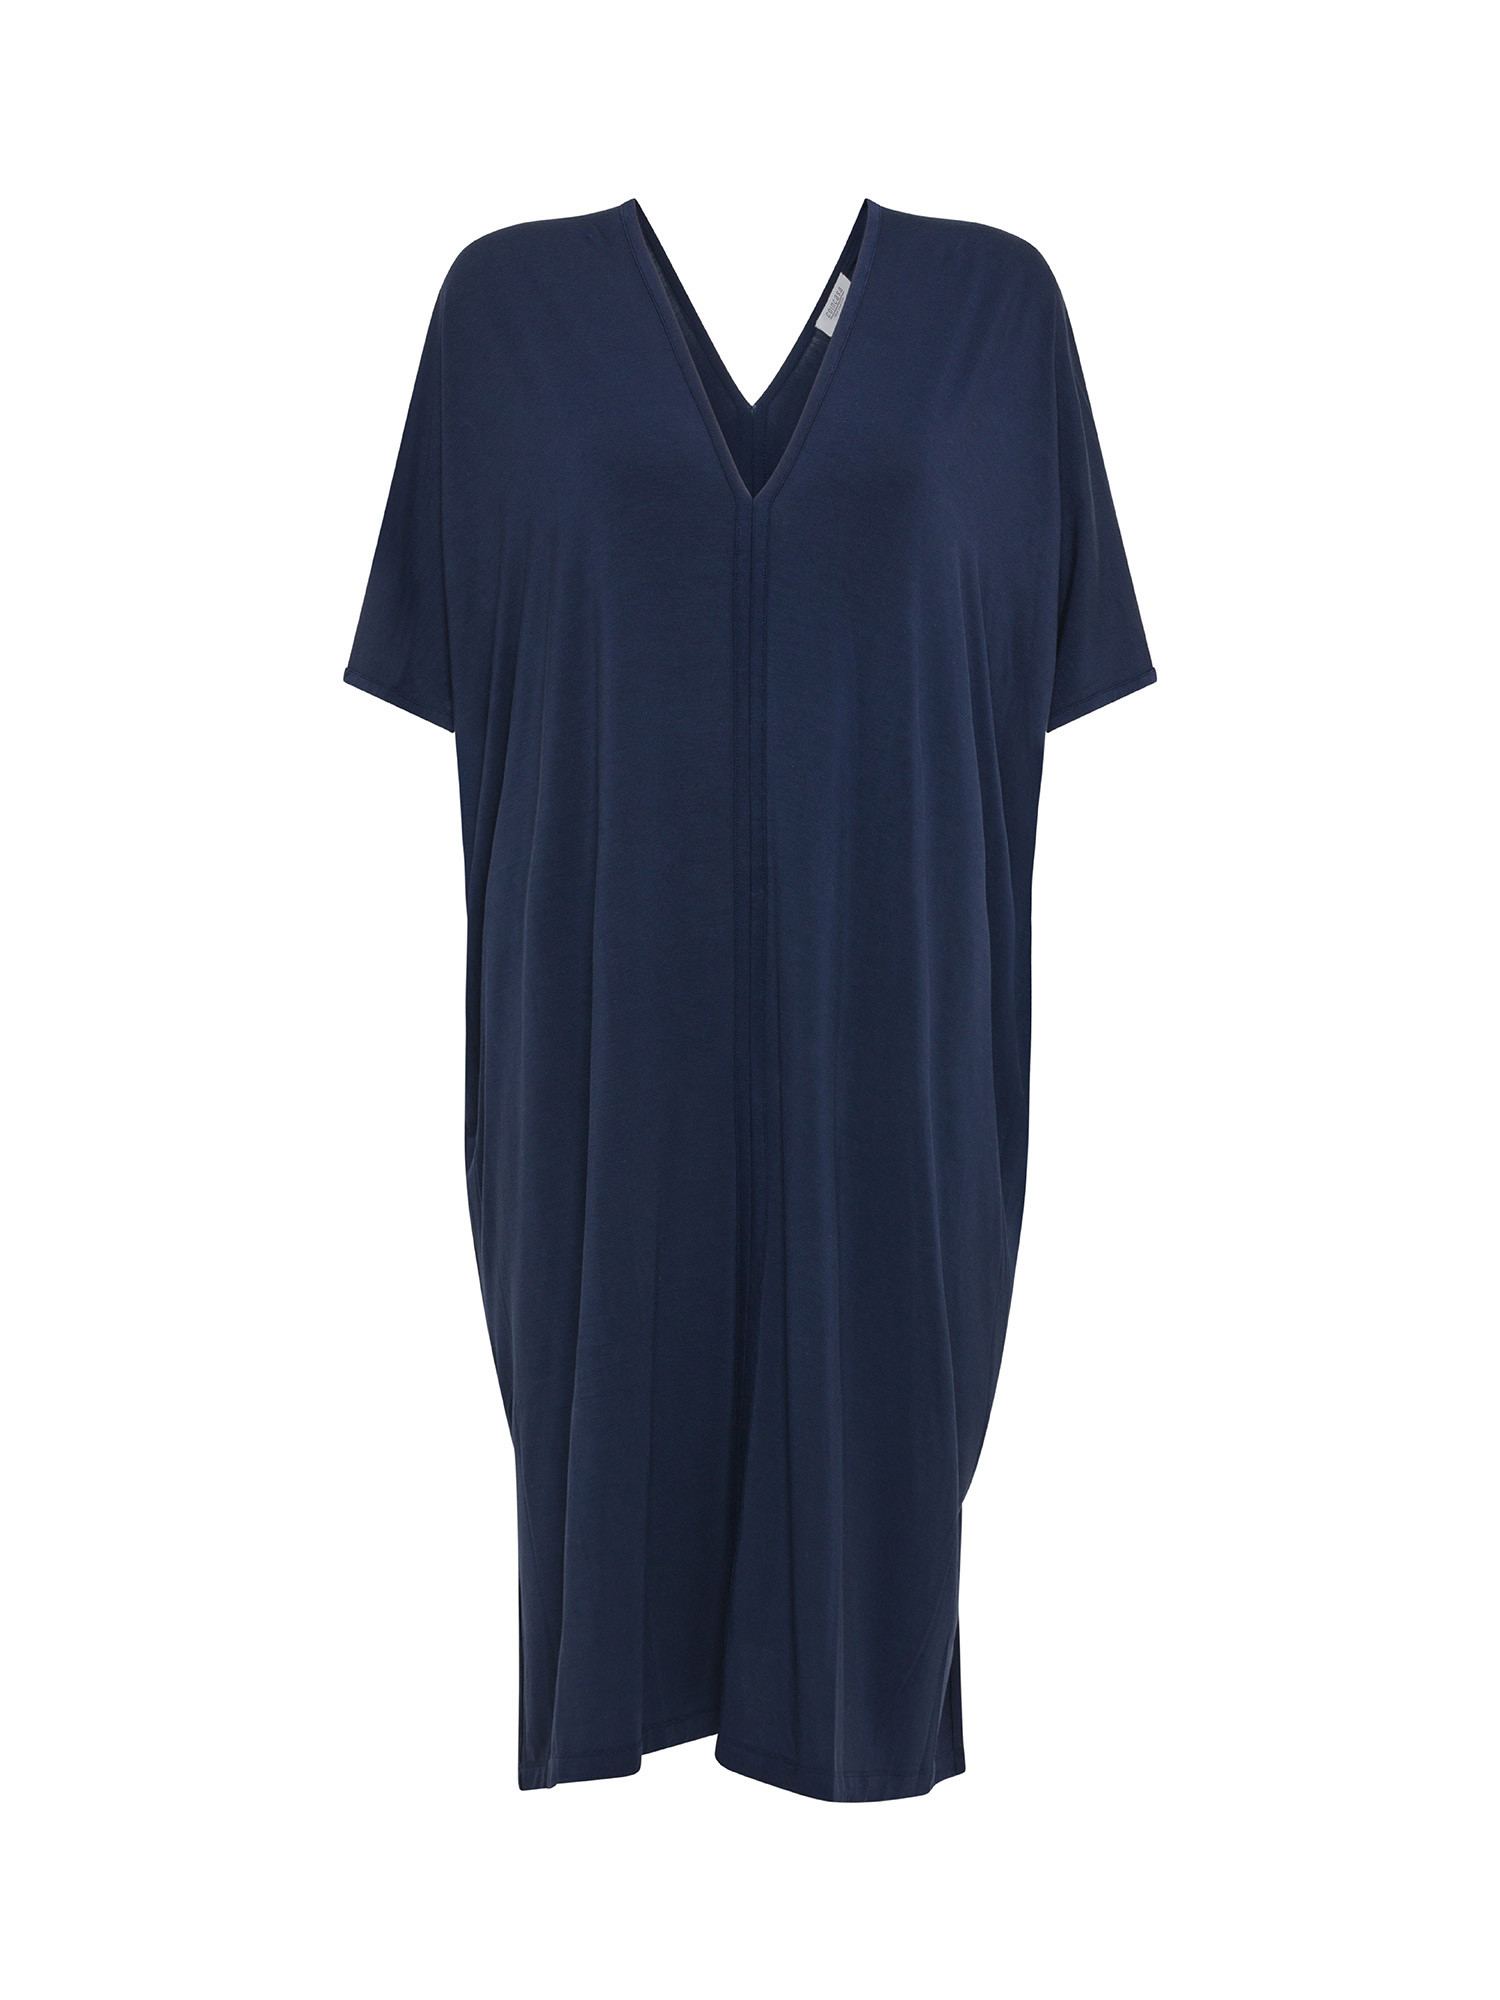 Bamboo viscose dress., Navy Blue, large image number 0